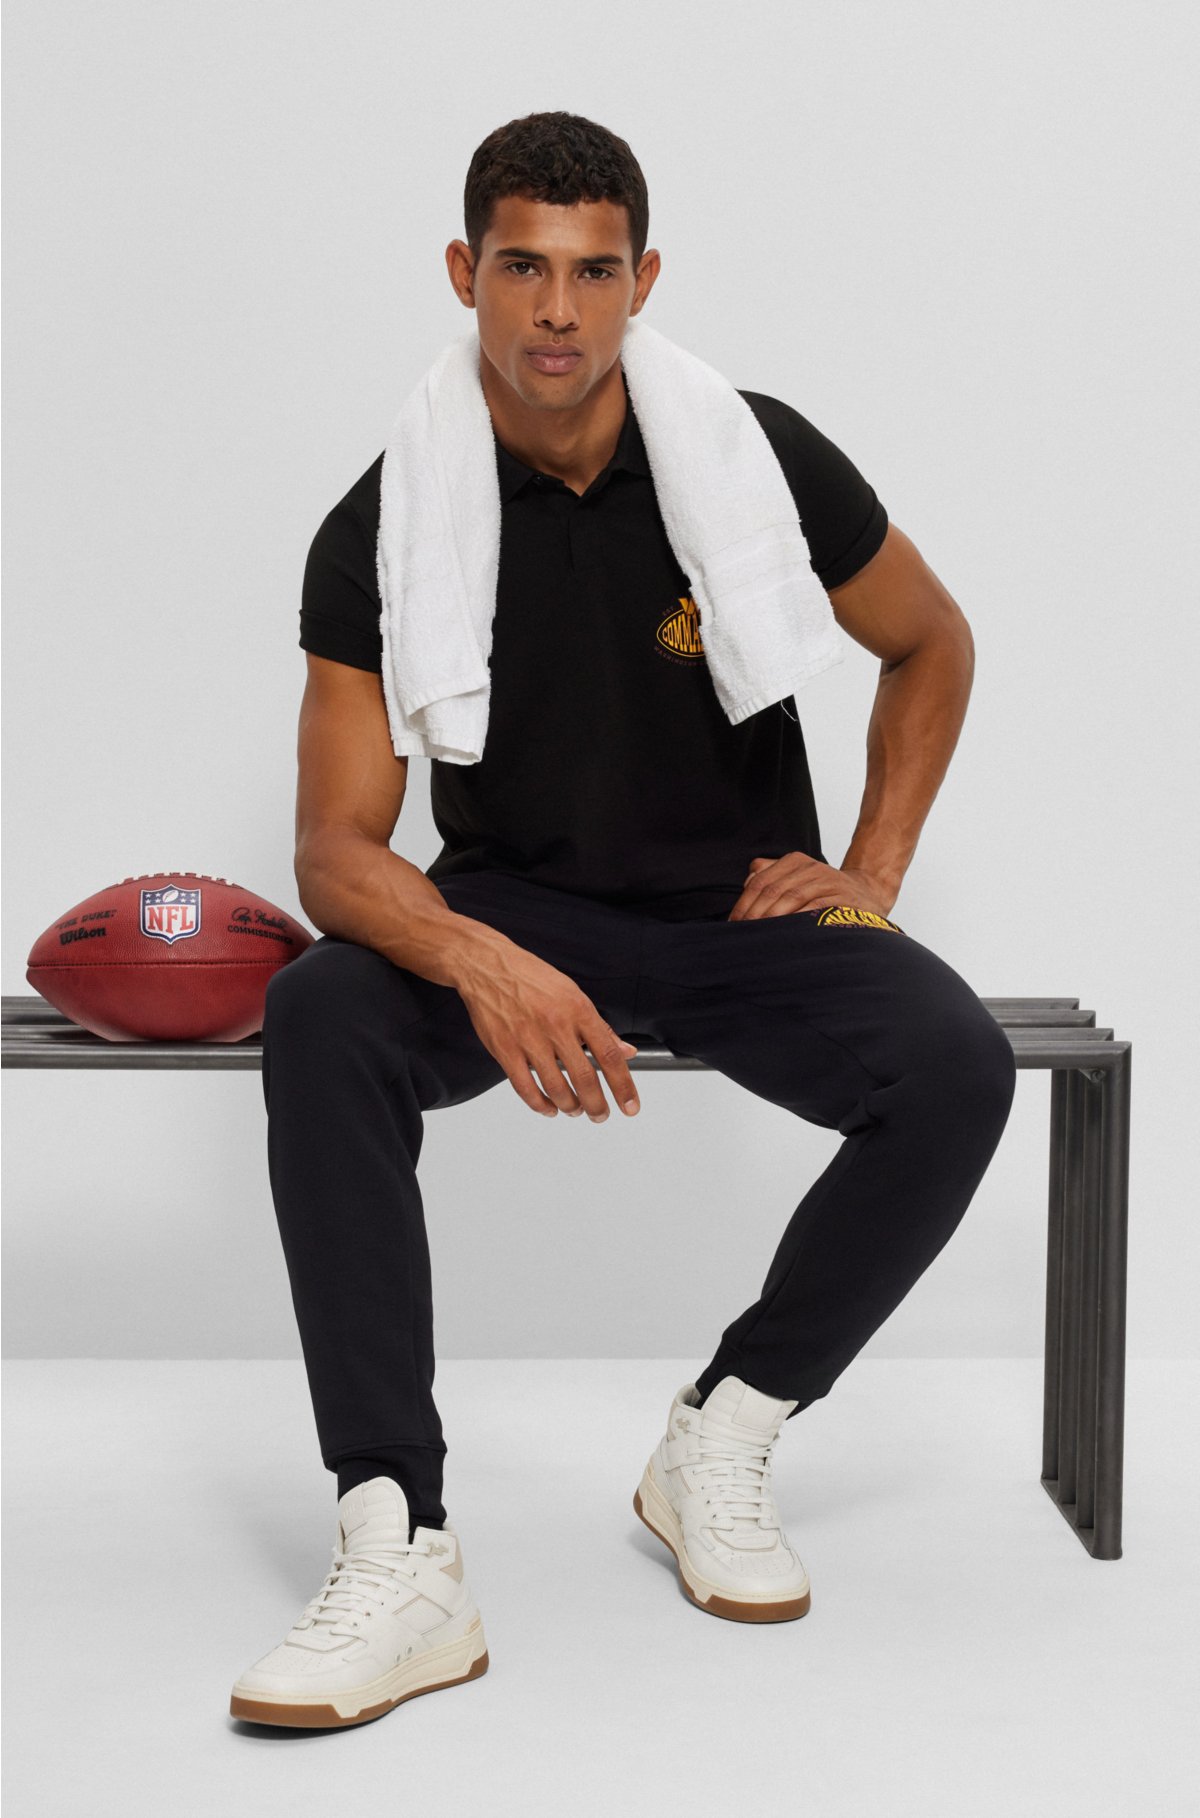 BOSS x NFL cotton-piqué polo shirt with collaborative branding, Commanders